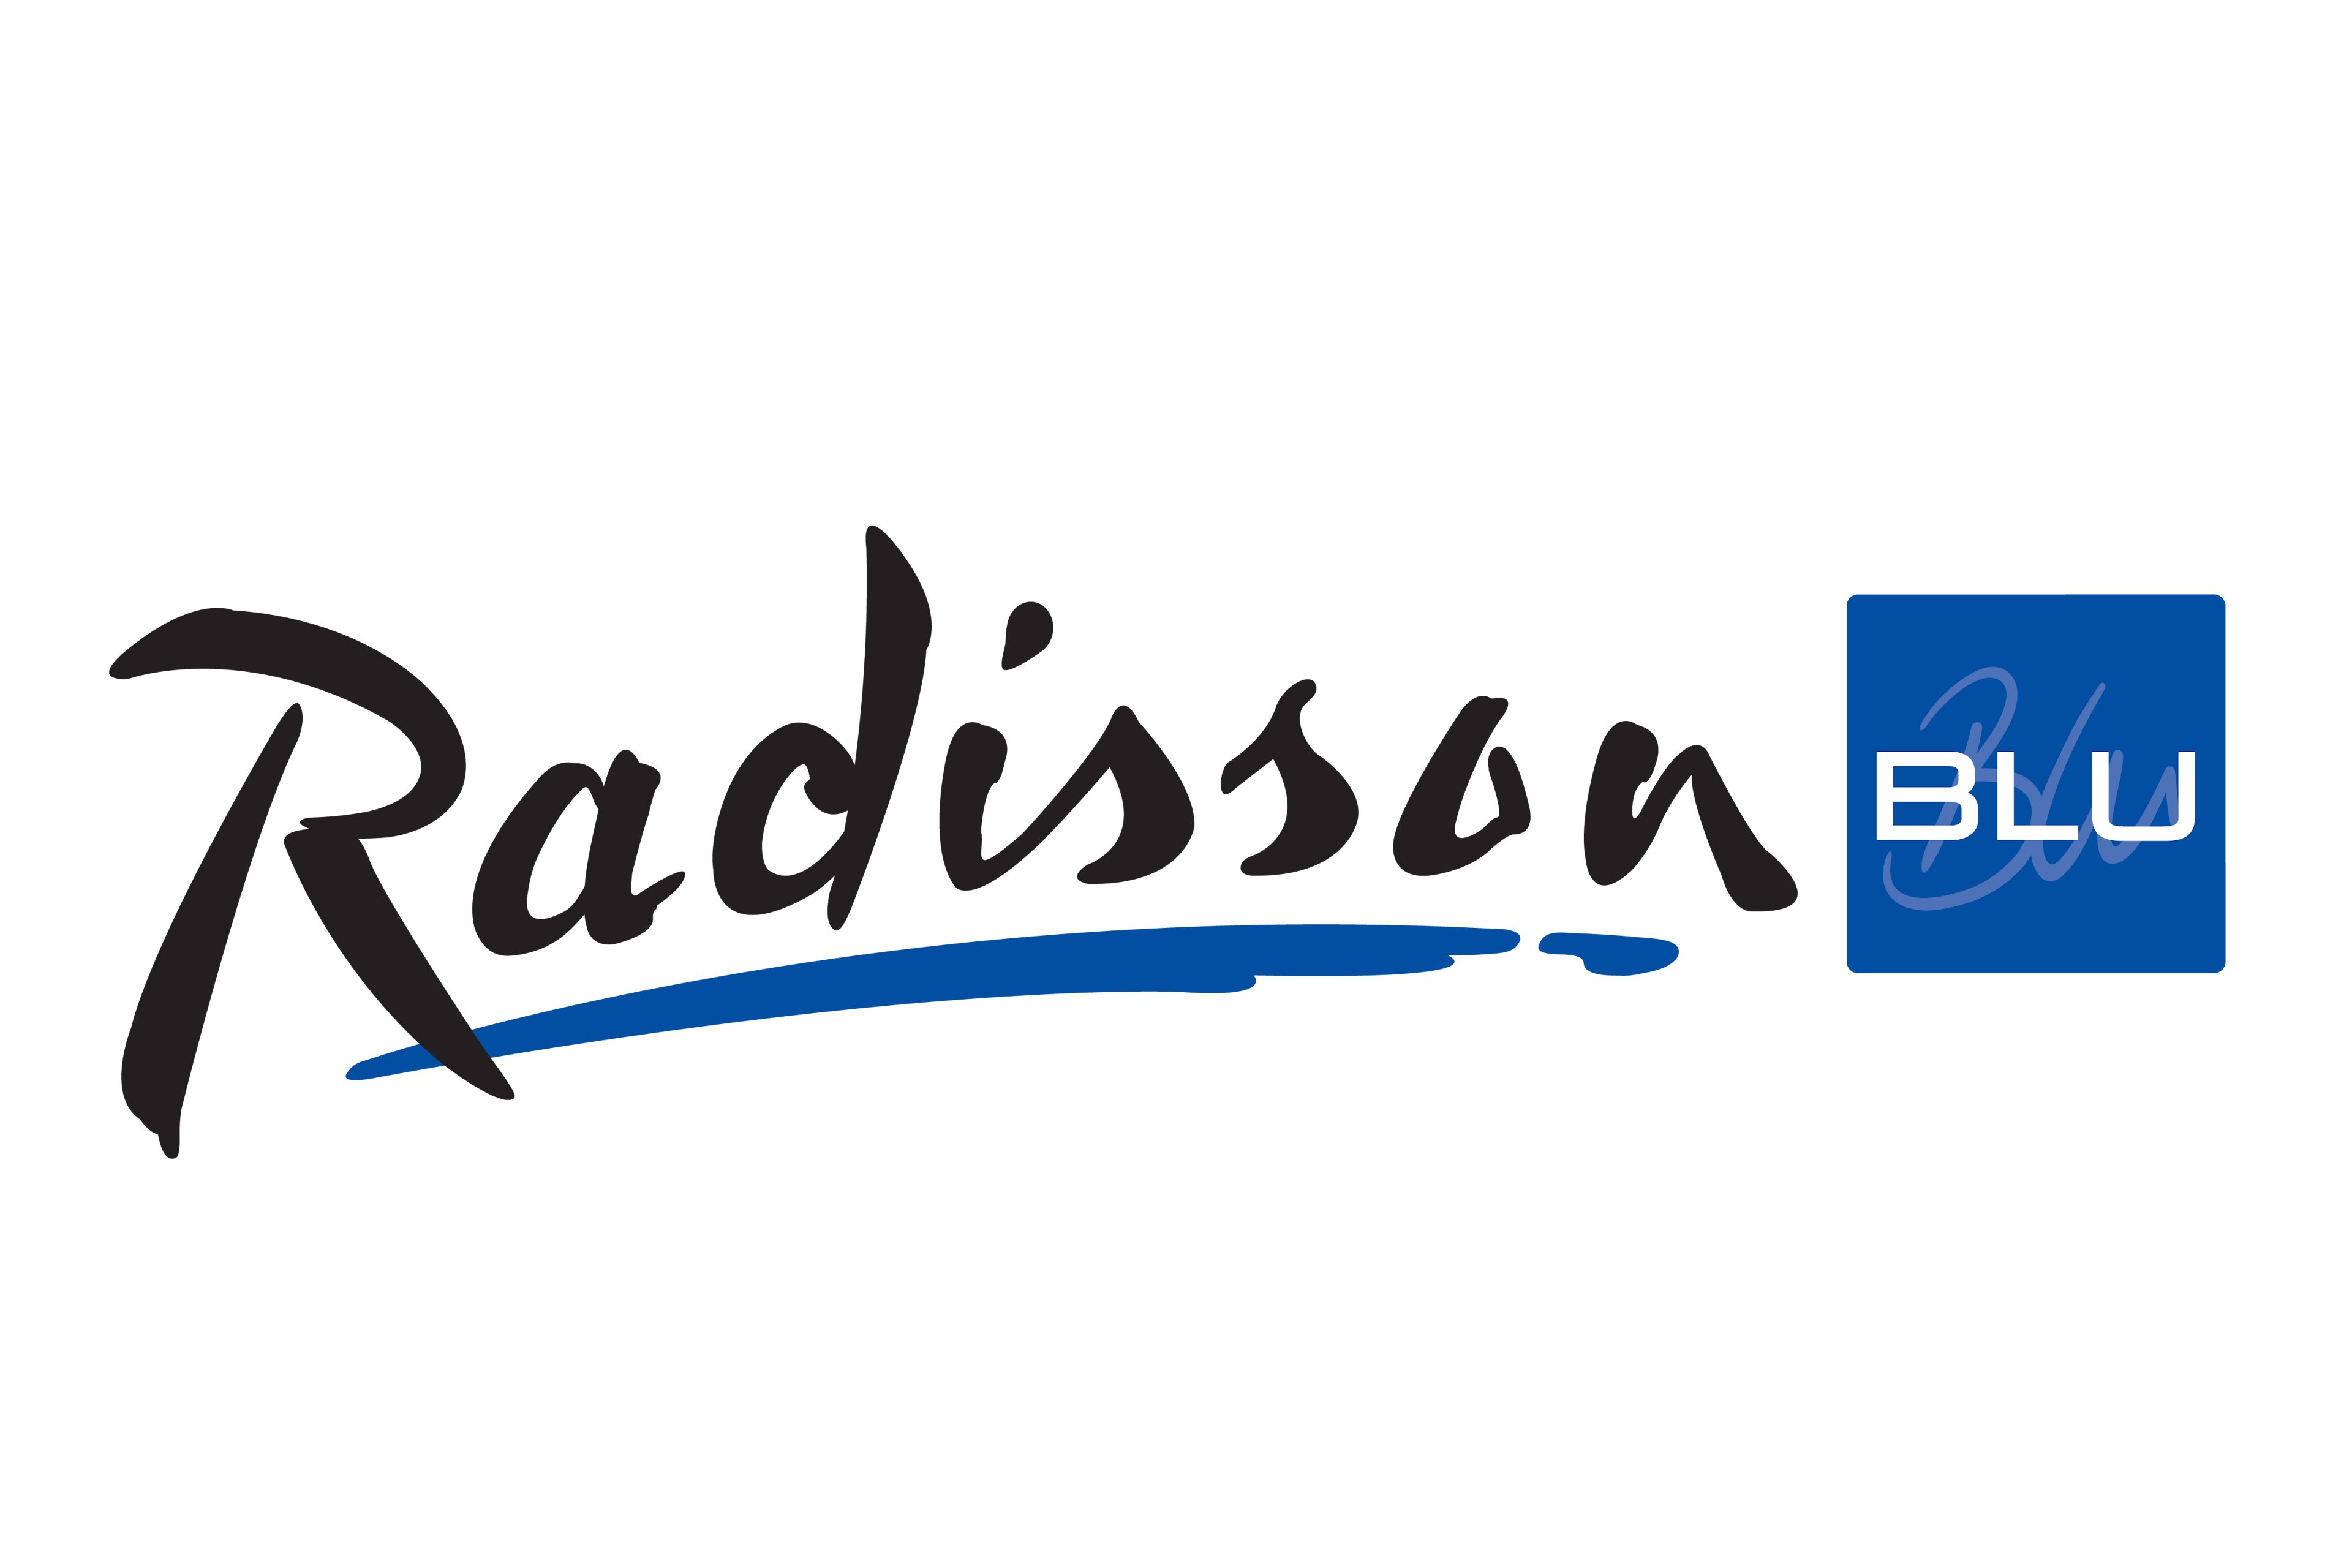 logo of Radisson Blu